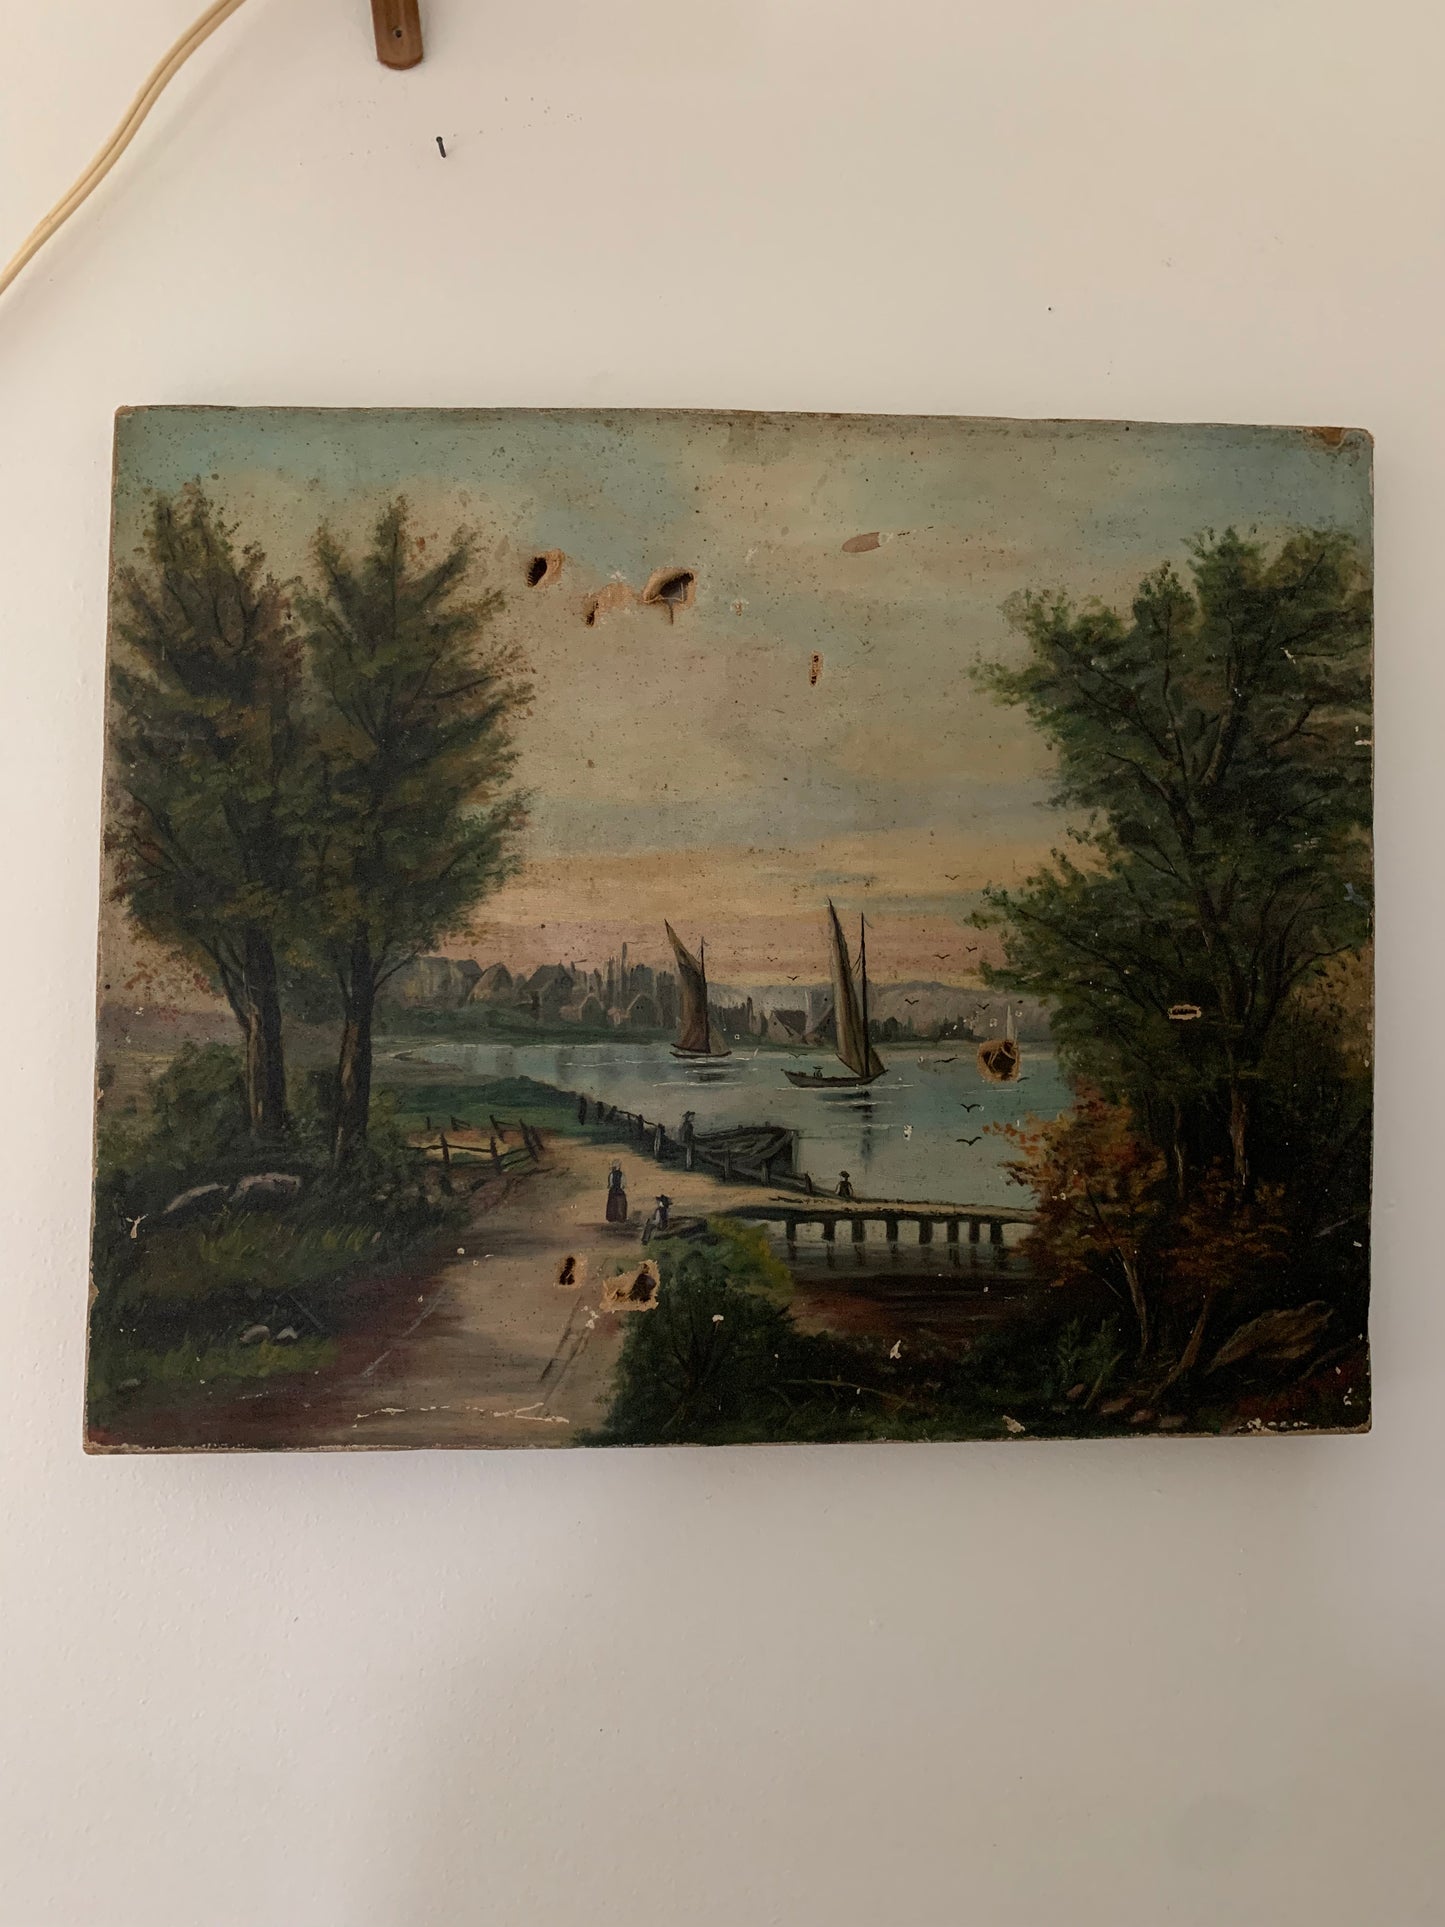 Vintage landscape oil painting on canvas | nautical